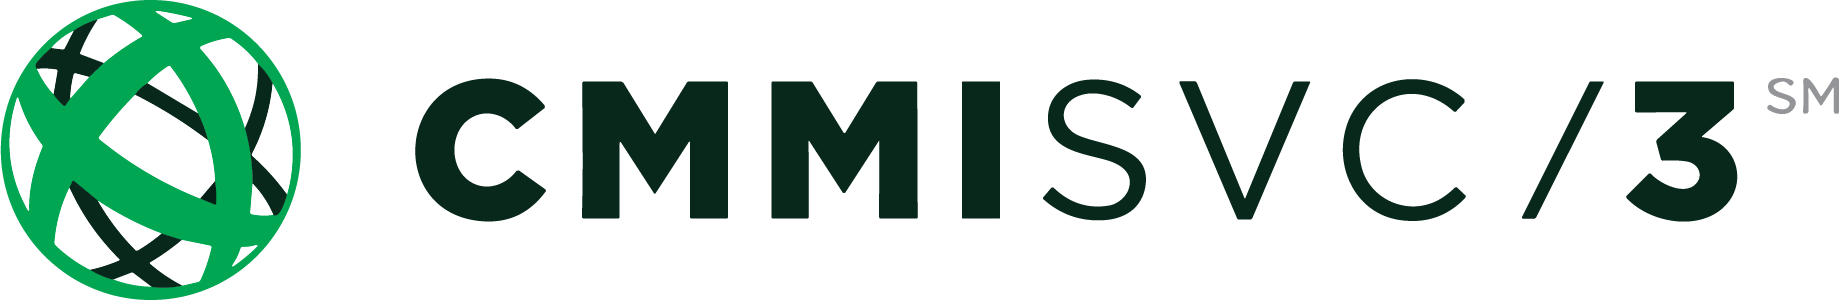 CustomSoft CMMIDEV/5 Version 2.0 Certification [logo]